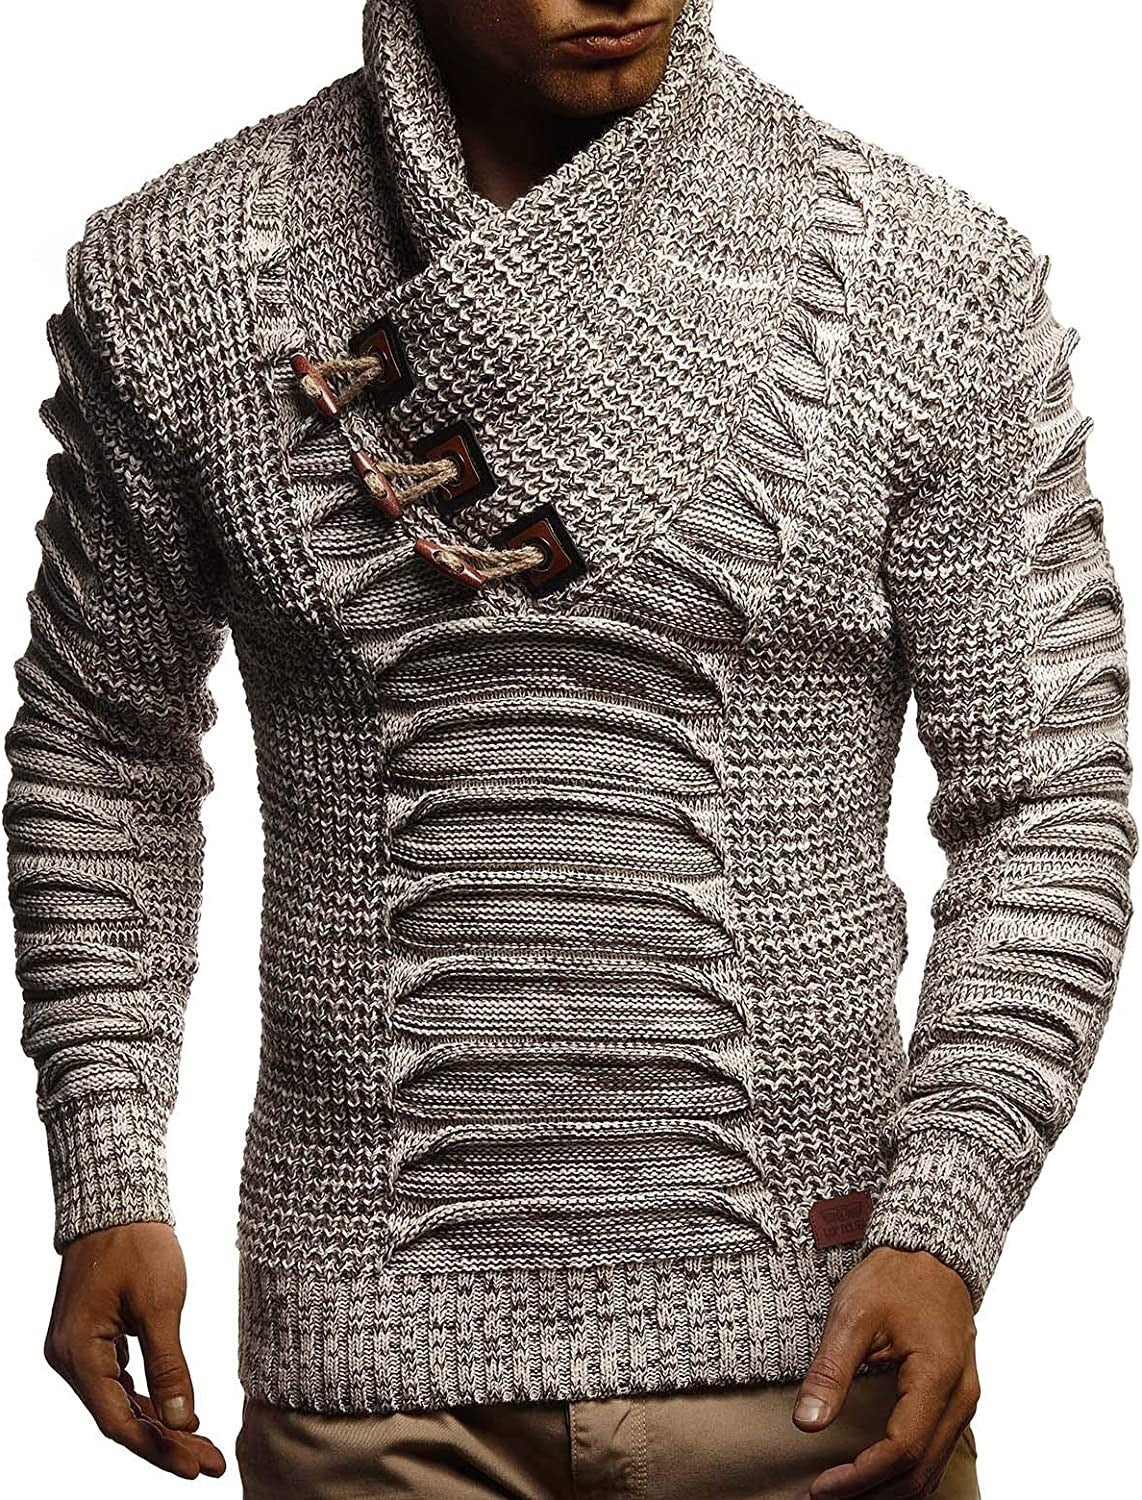 Slim-Fit Turtleneck Sweater – Long Sleeve, Knit Pullover